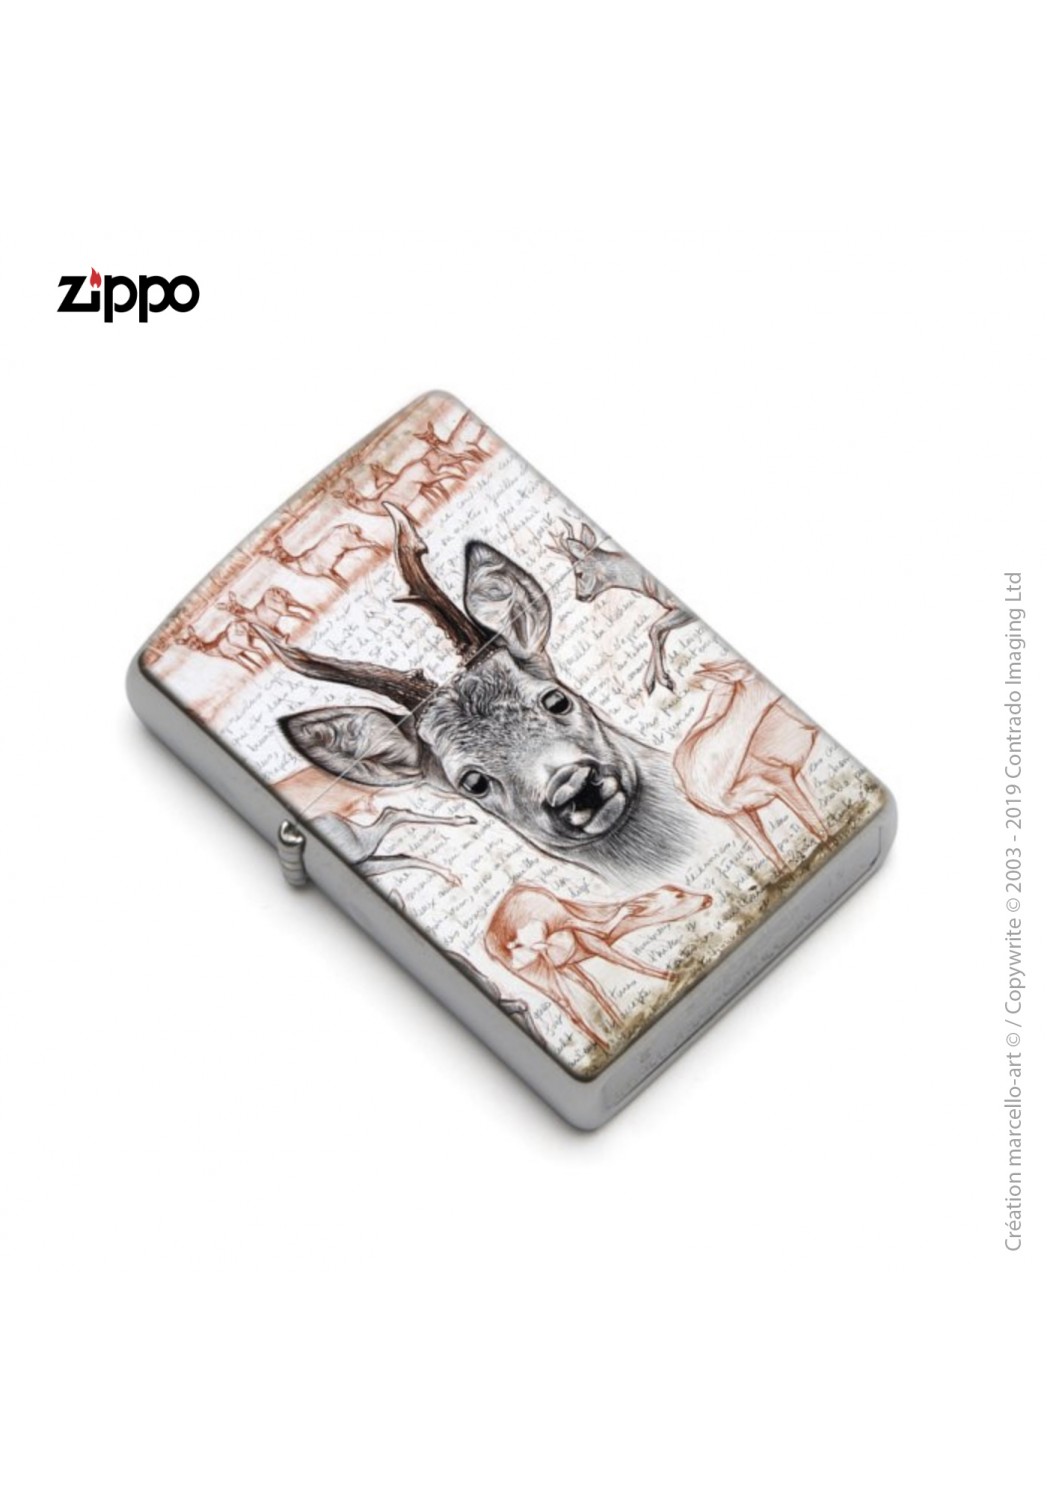 Marcello-art: Decoration accessoiries Zippo 280 roe deer